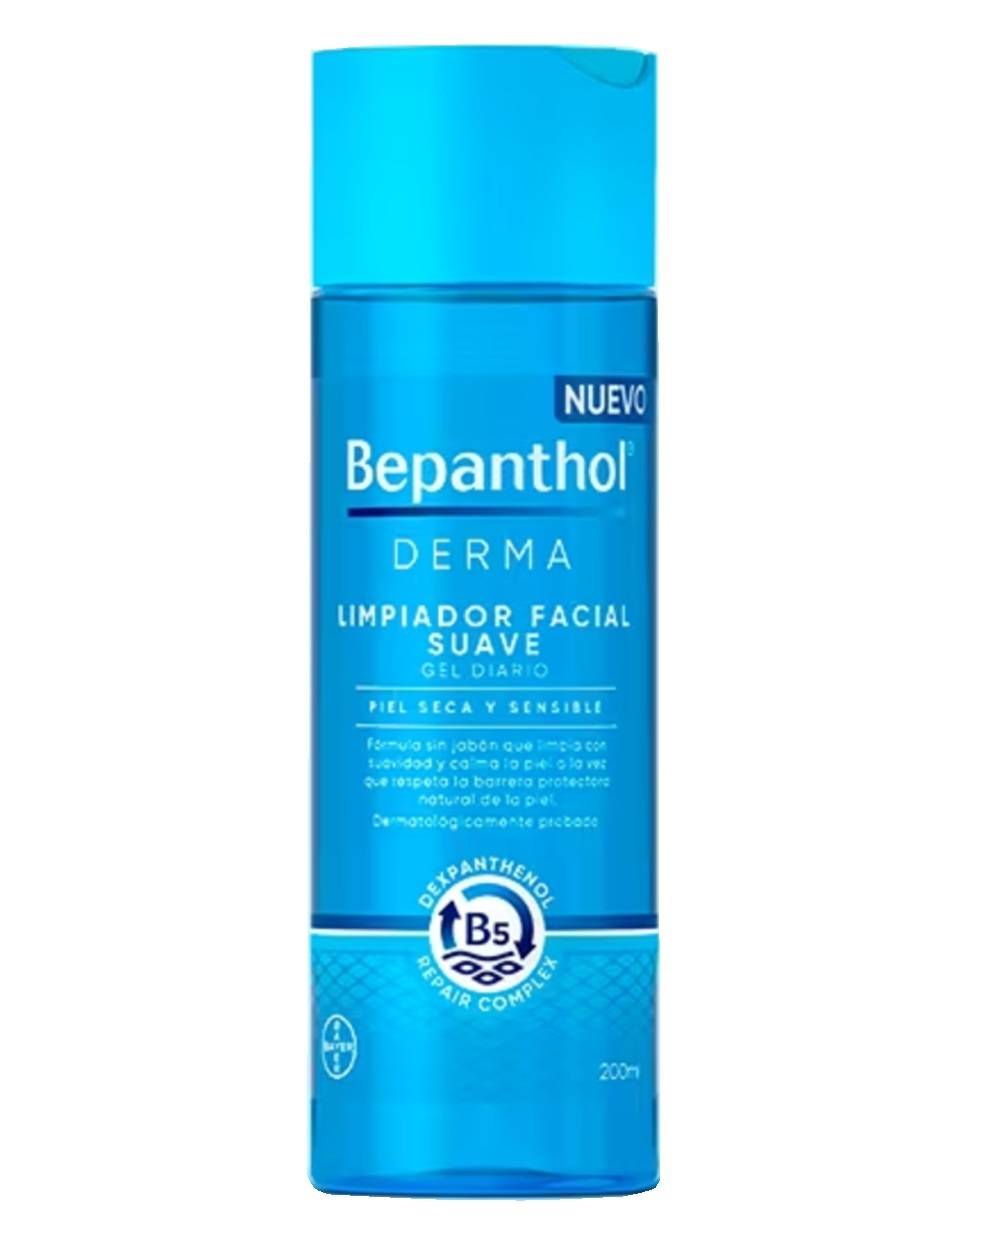 Bepanthol derma - Limpiador facial suave - Gel diario - 200 ml